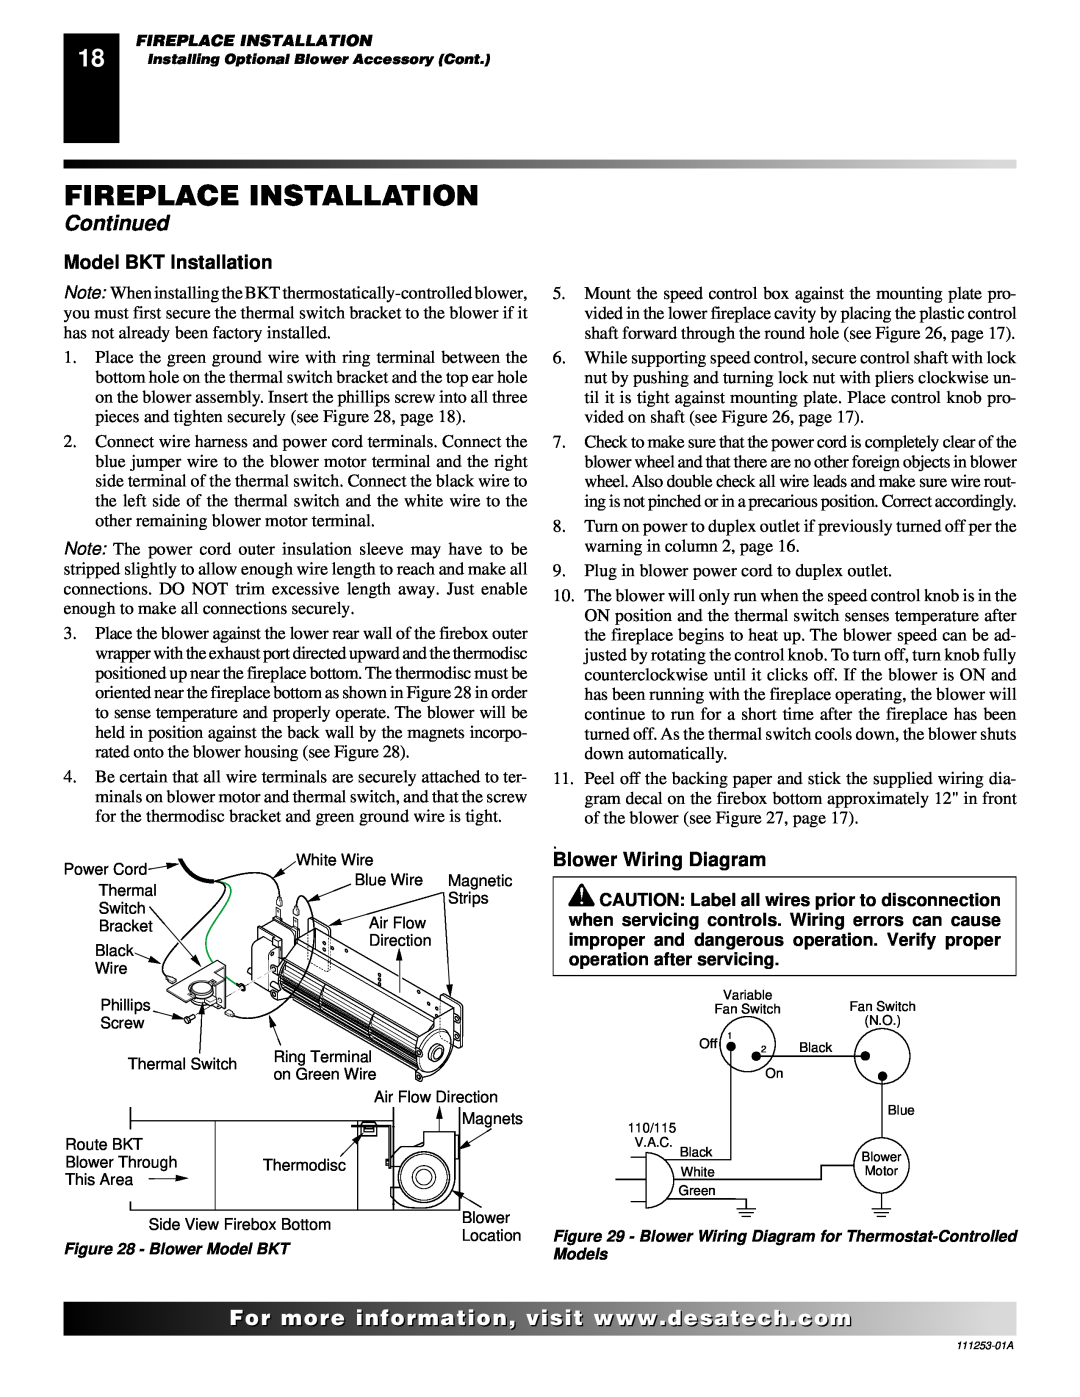 Desa (V)V36ENA(1), (V)V36EPA(1) Model BKT Installation, Blower Wiring Diagram, Fireplace Installation, Continued 